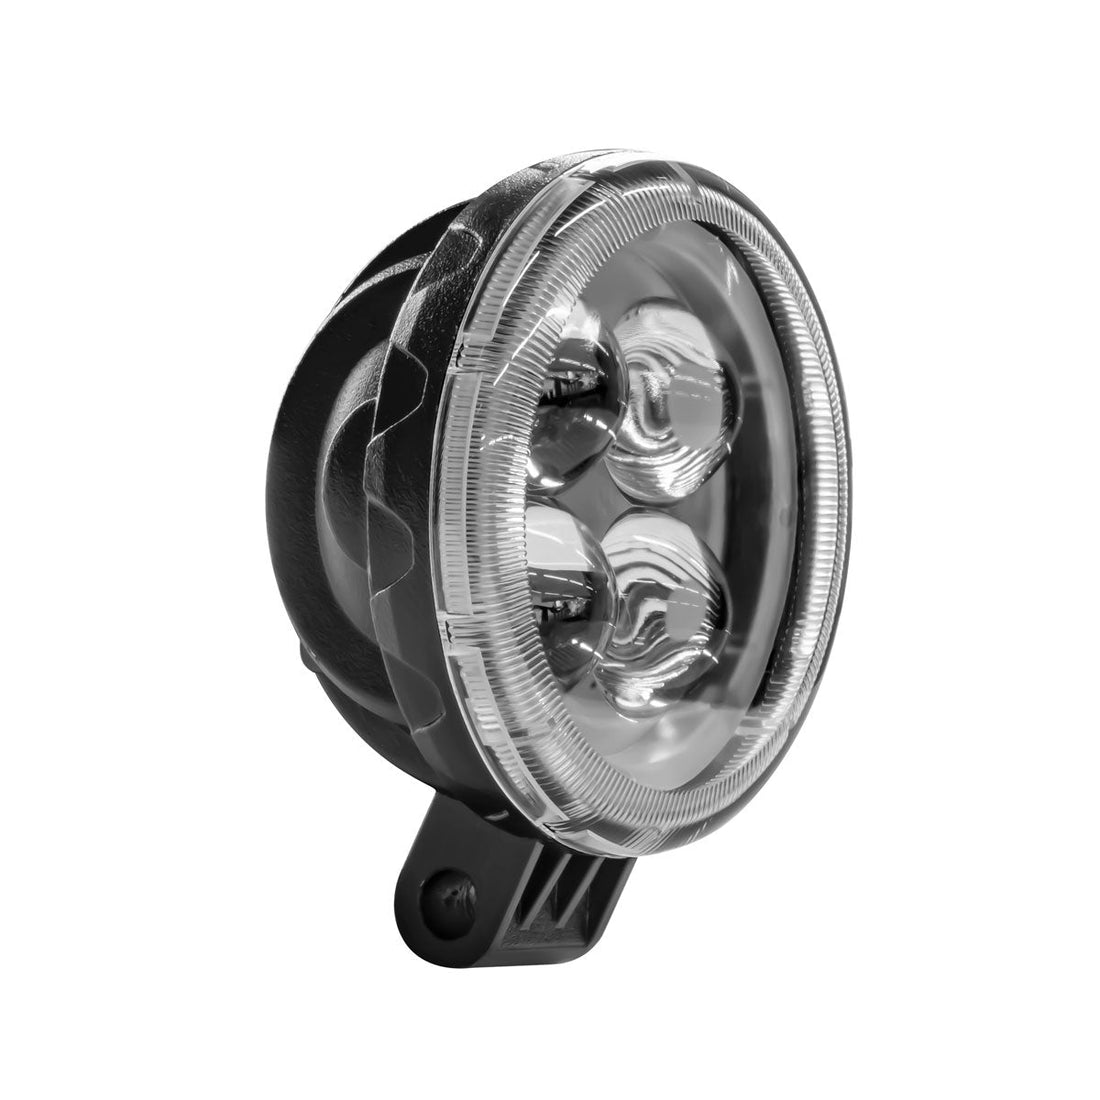 Himiway E-bike Headlight Front Light for Cruiser